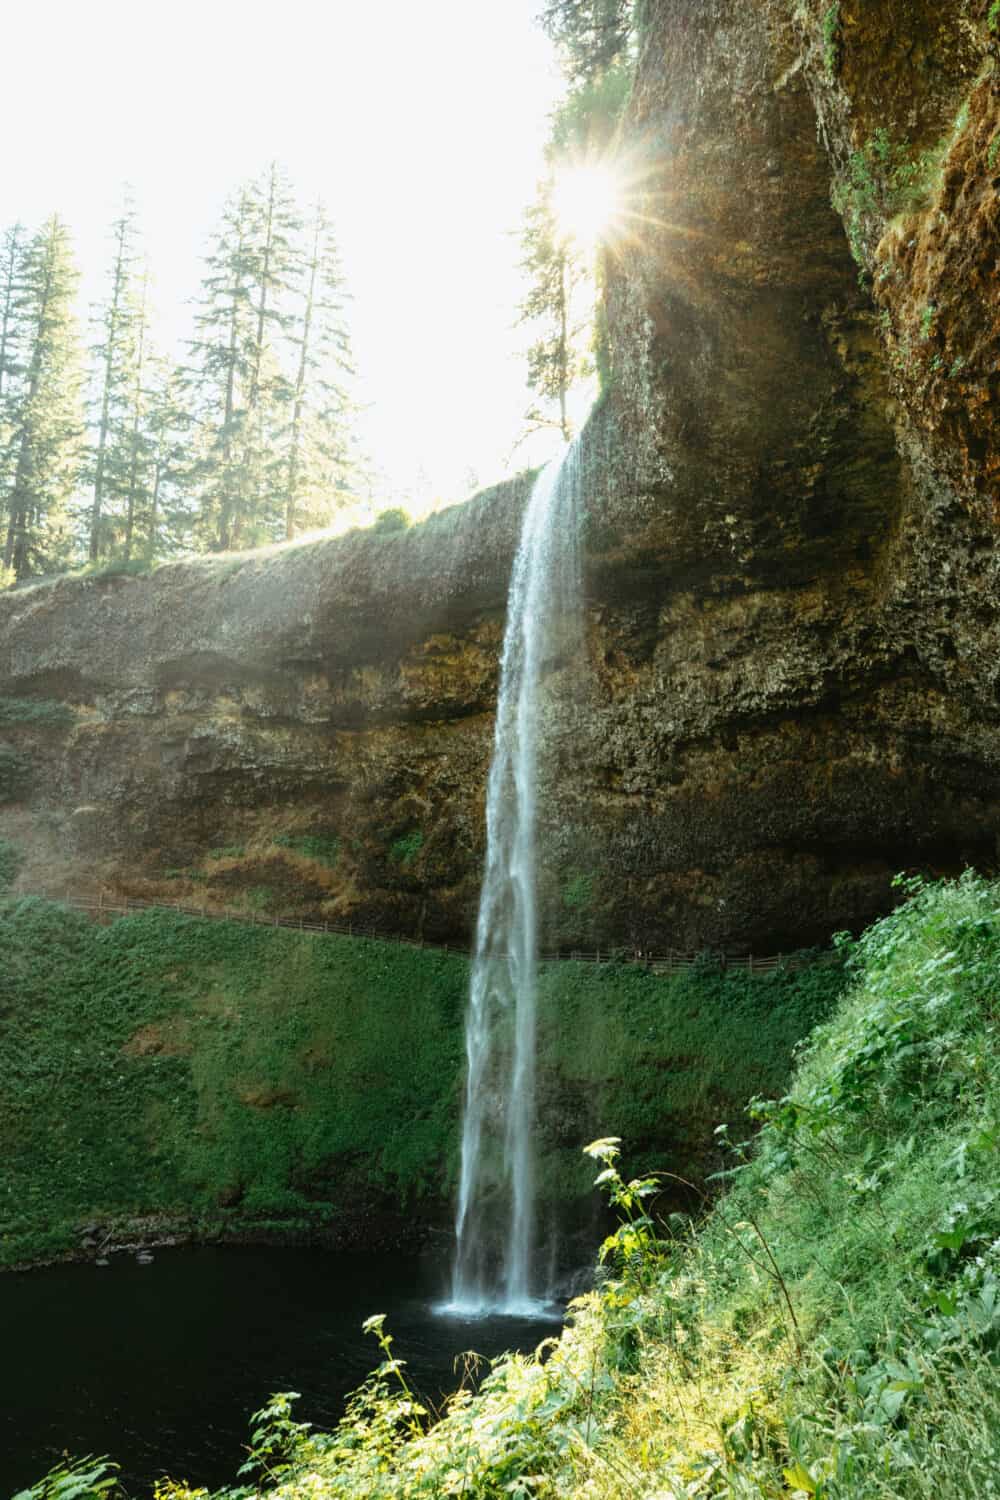 The South Falls - Trail of Ten Falls